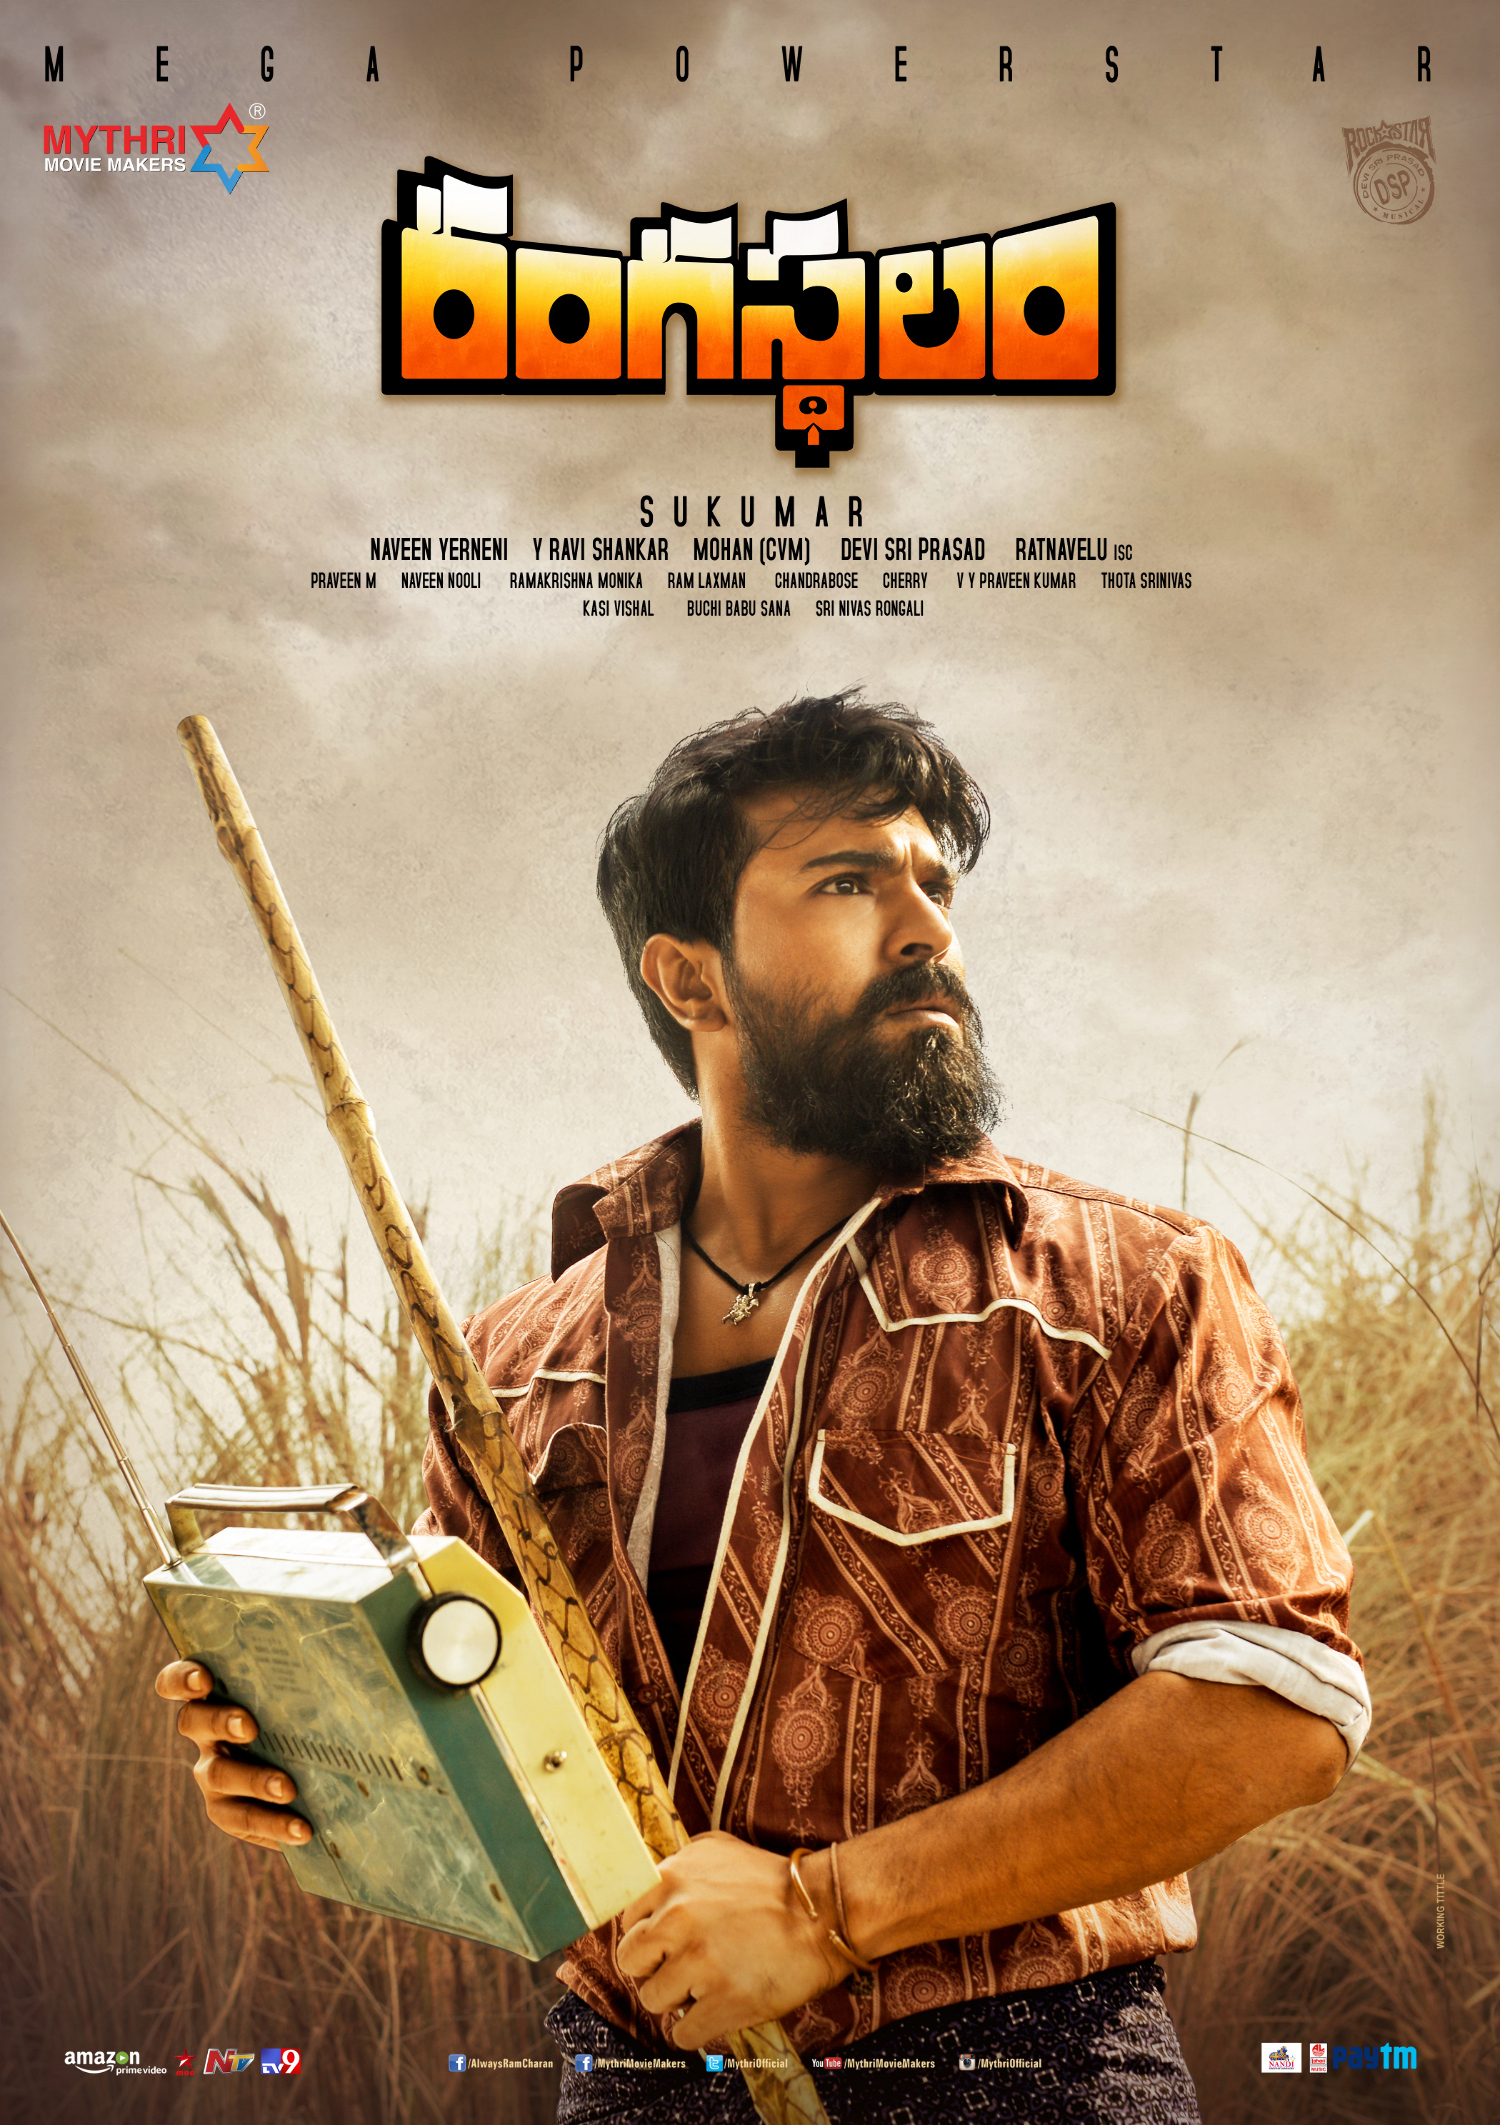 Rangasthalam Telugu Movie Poster rangasthalam photo 29 from album